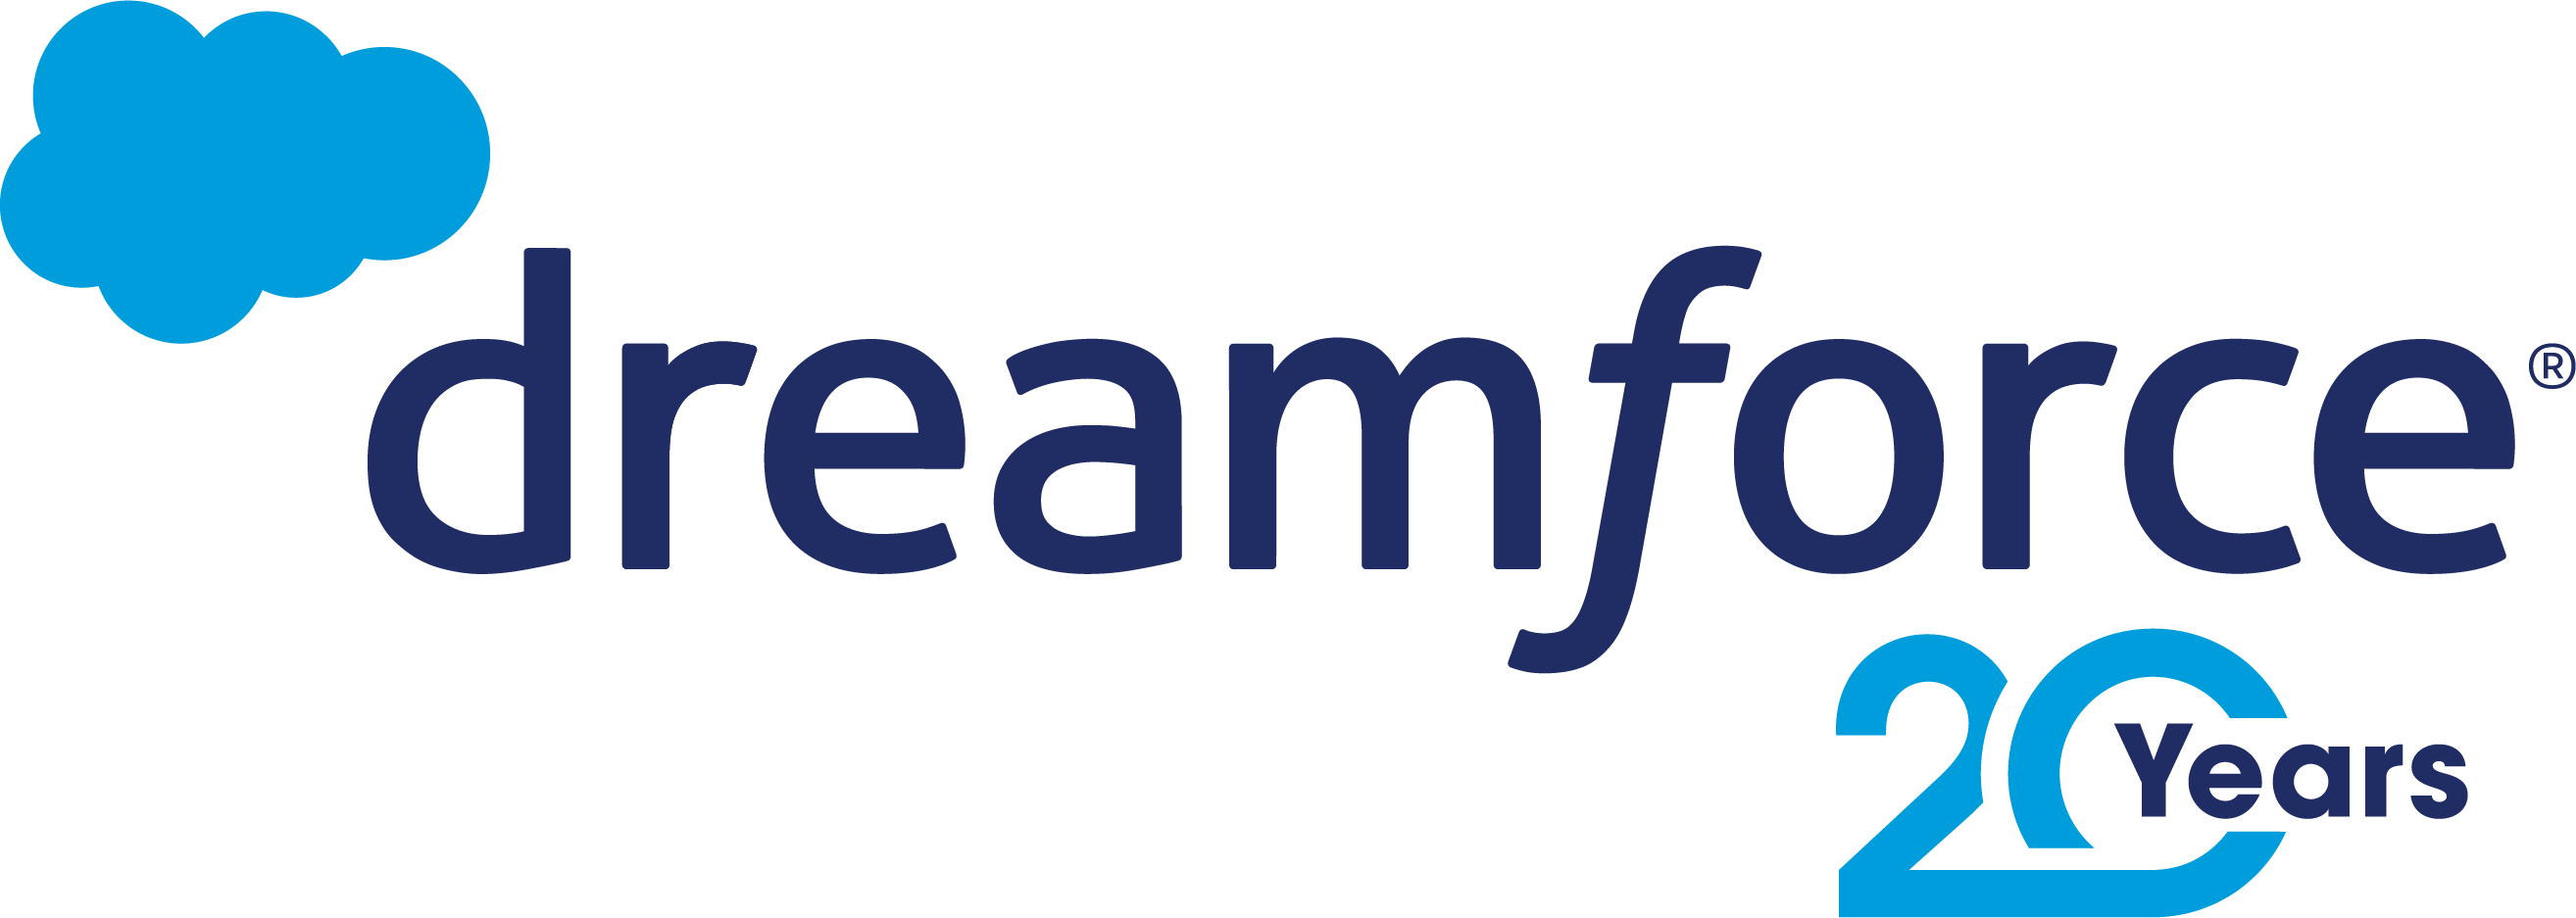 dreamforce 20 year logo